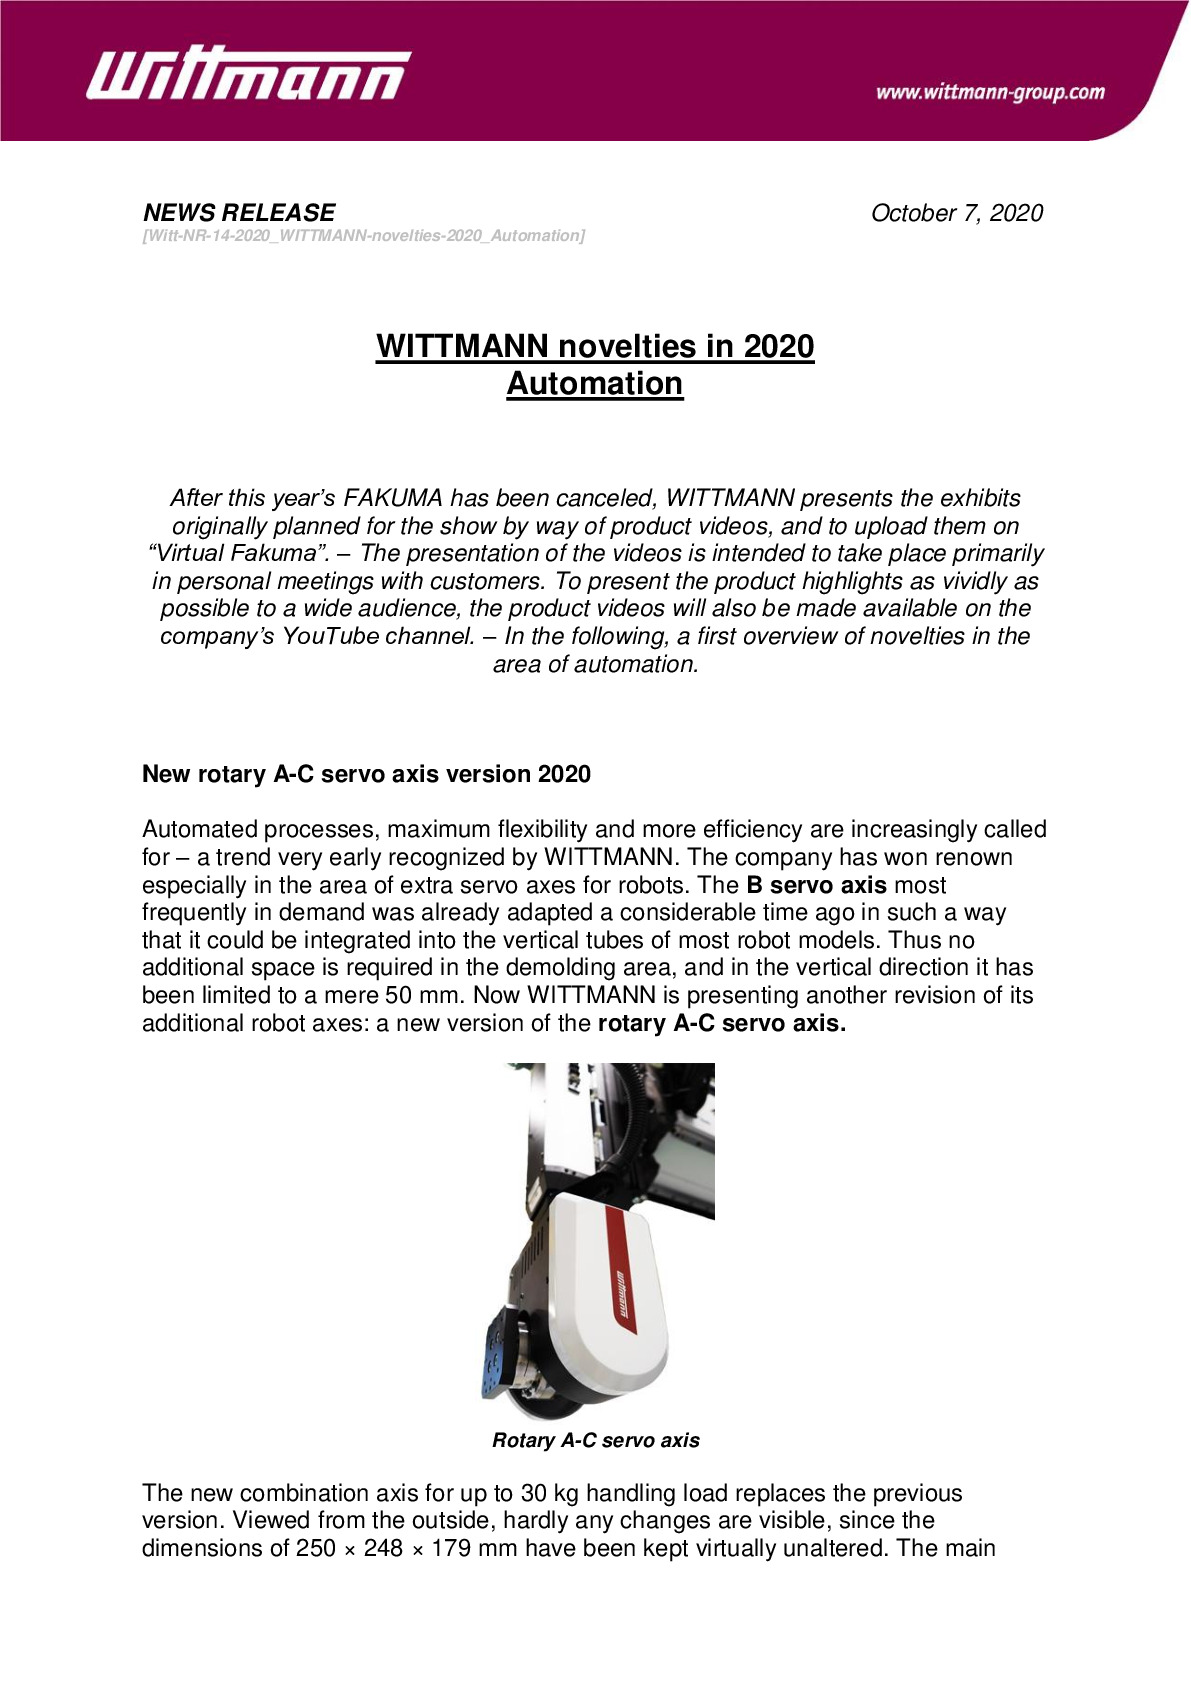 witt-nr-14-2020_wittmann-novelties-2020_automation